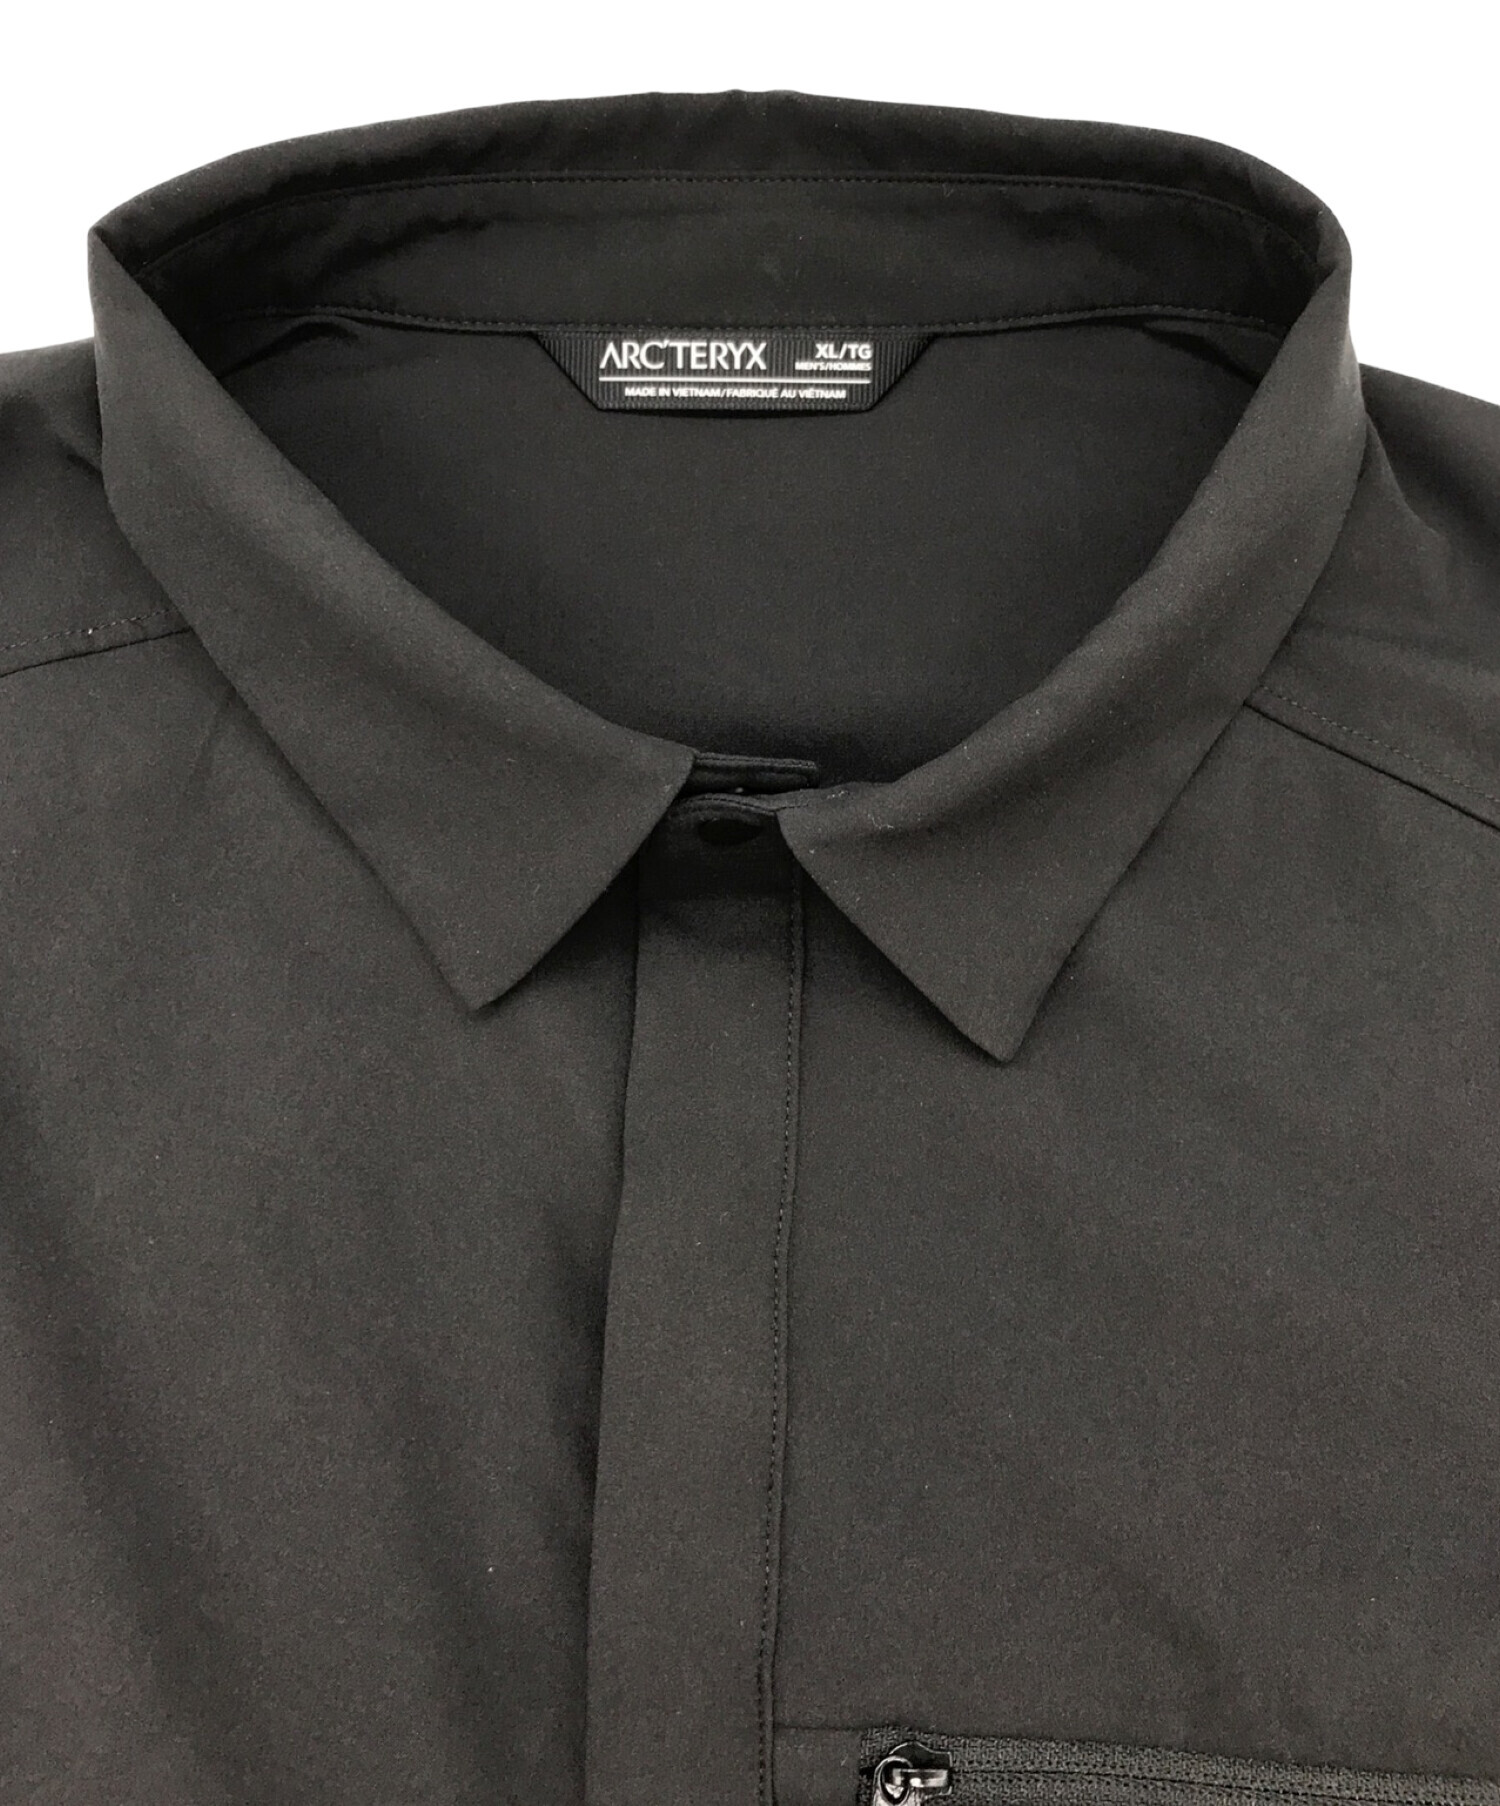 ARC'TERYX (アークテリクス) ショートスリーブテックシャツ ブラック サイズ:XL